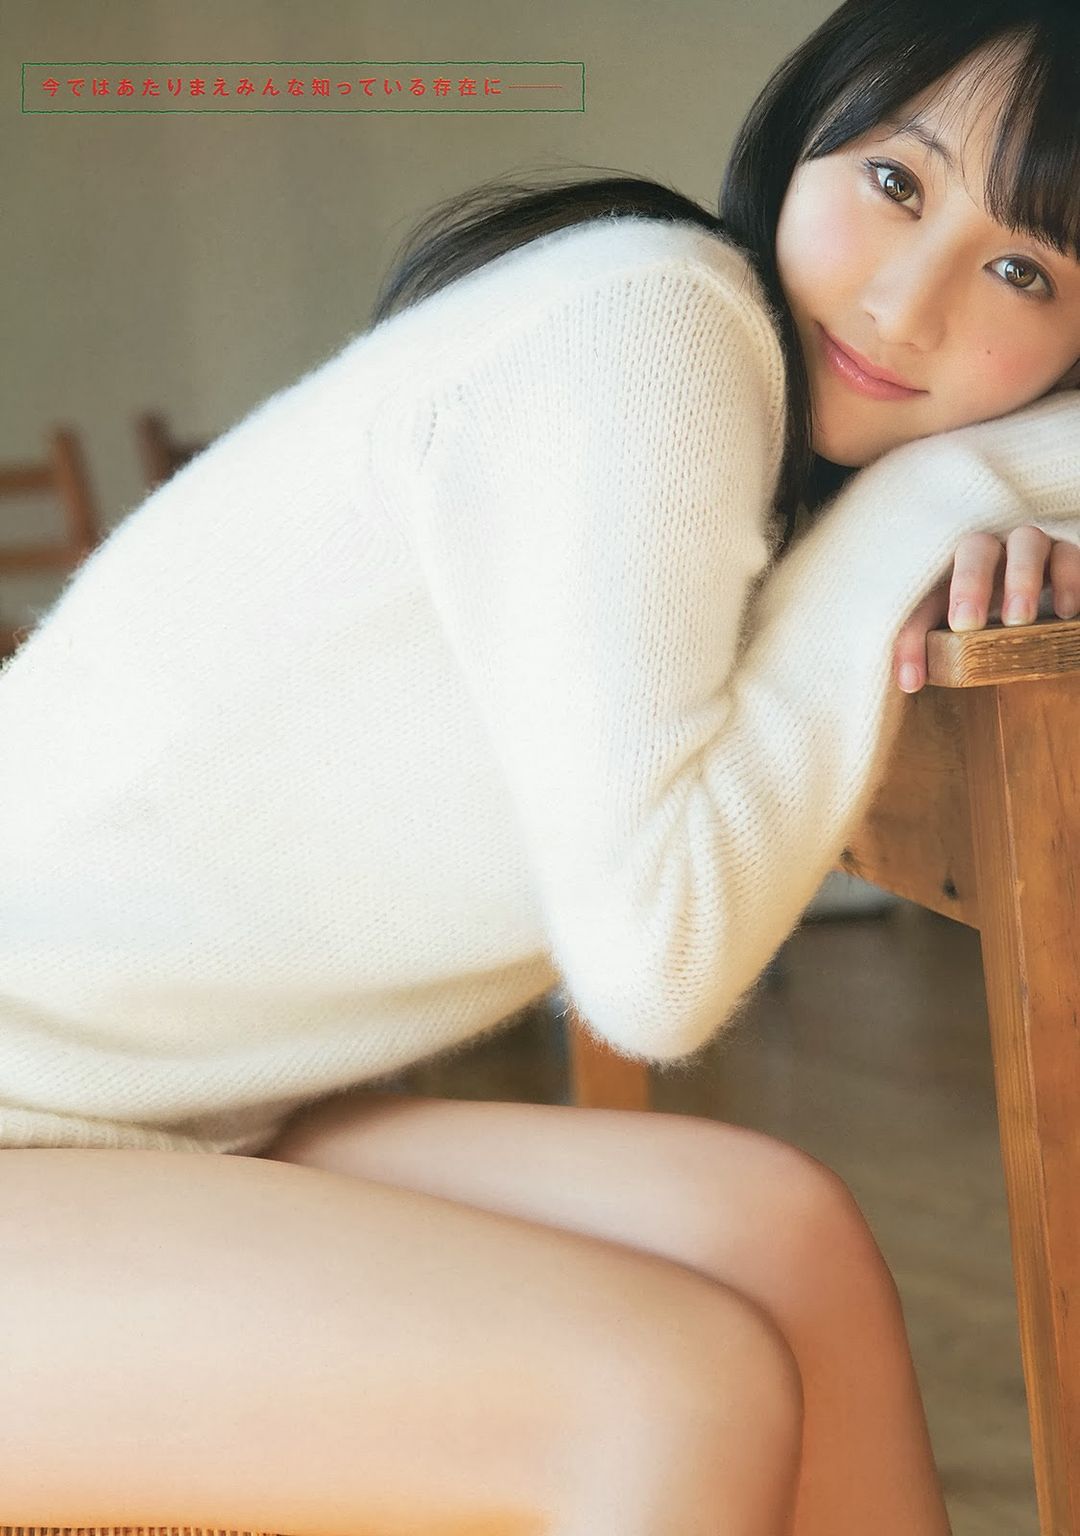 SKE48 Rena Matsui Tomato on Young Animal Magazine 005.jpg